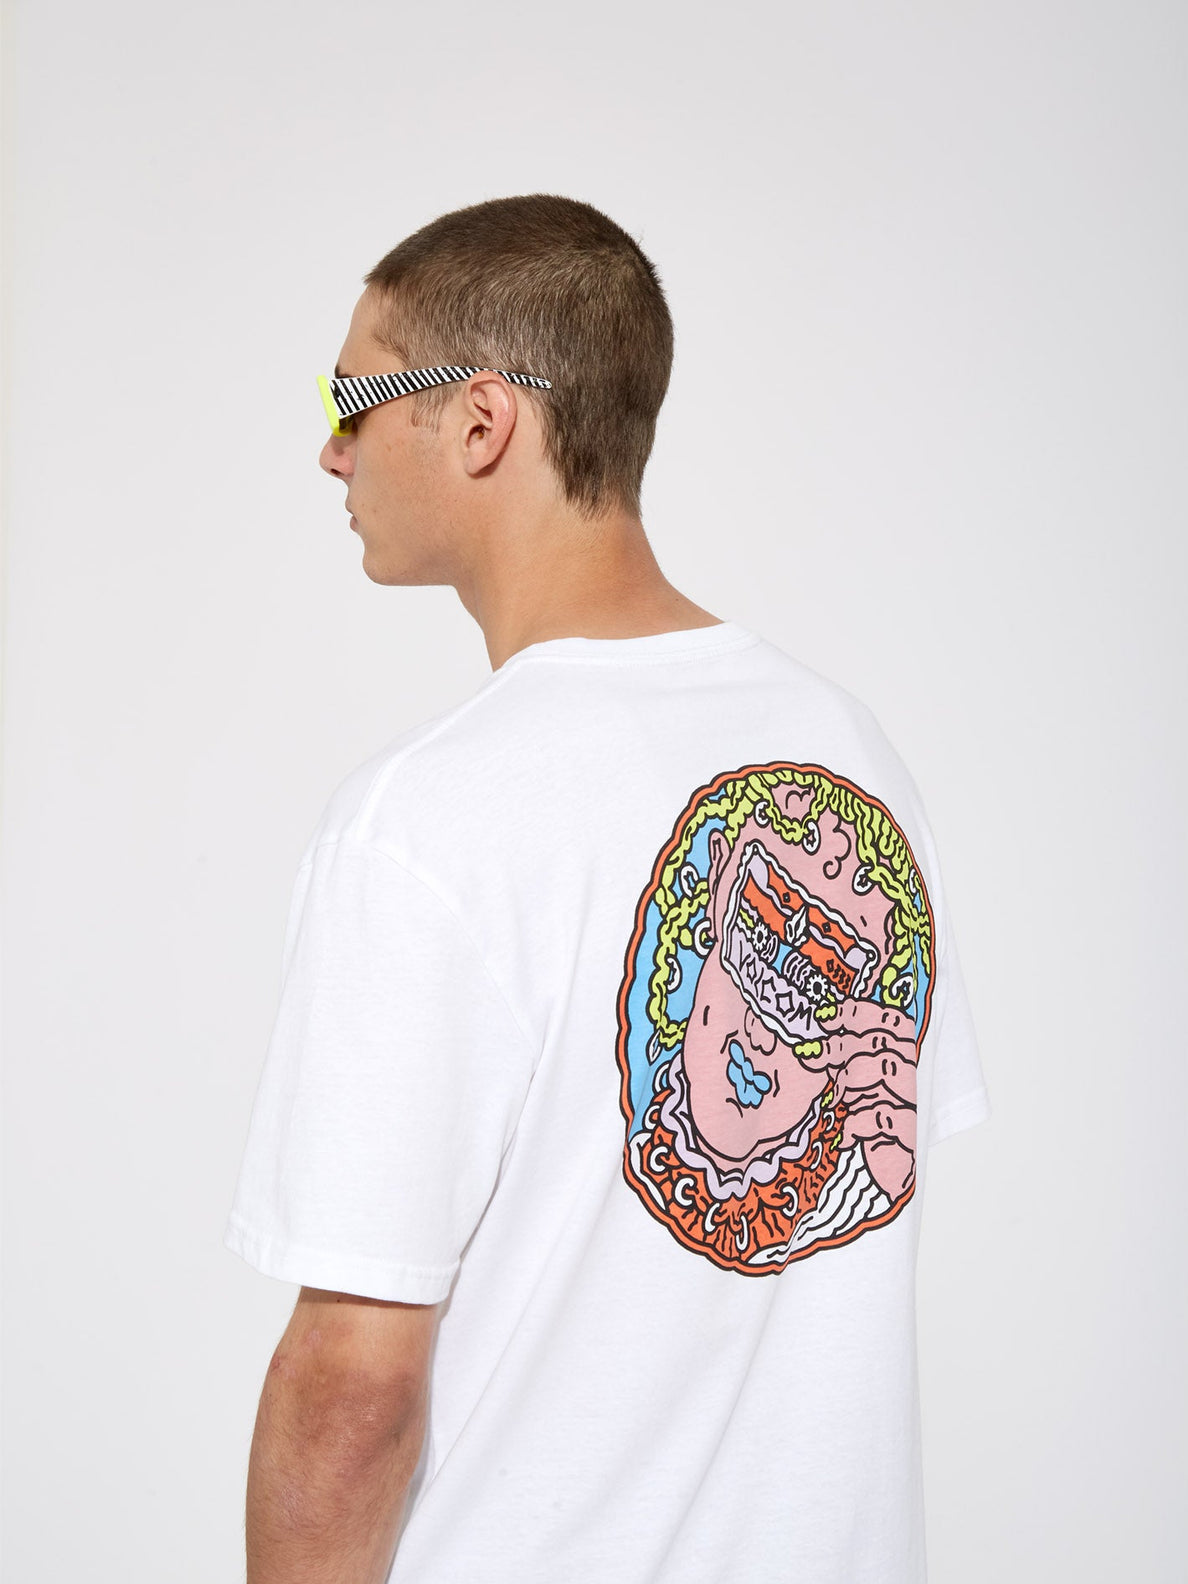 Volcom Connected Minds Weißes T-Shirt | Meistverkaufte Produkte | Neue Produkte | Neueste Produkte | surfdevils.com